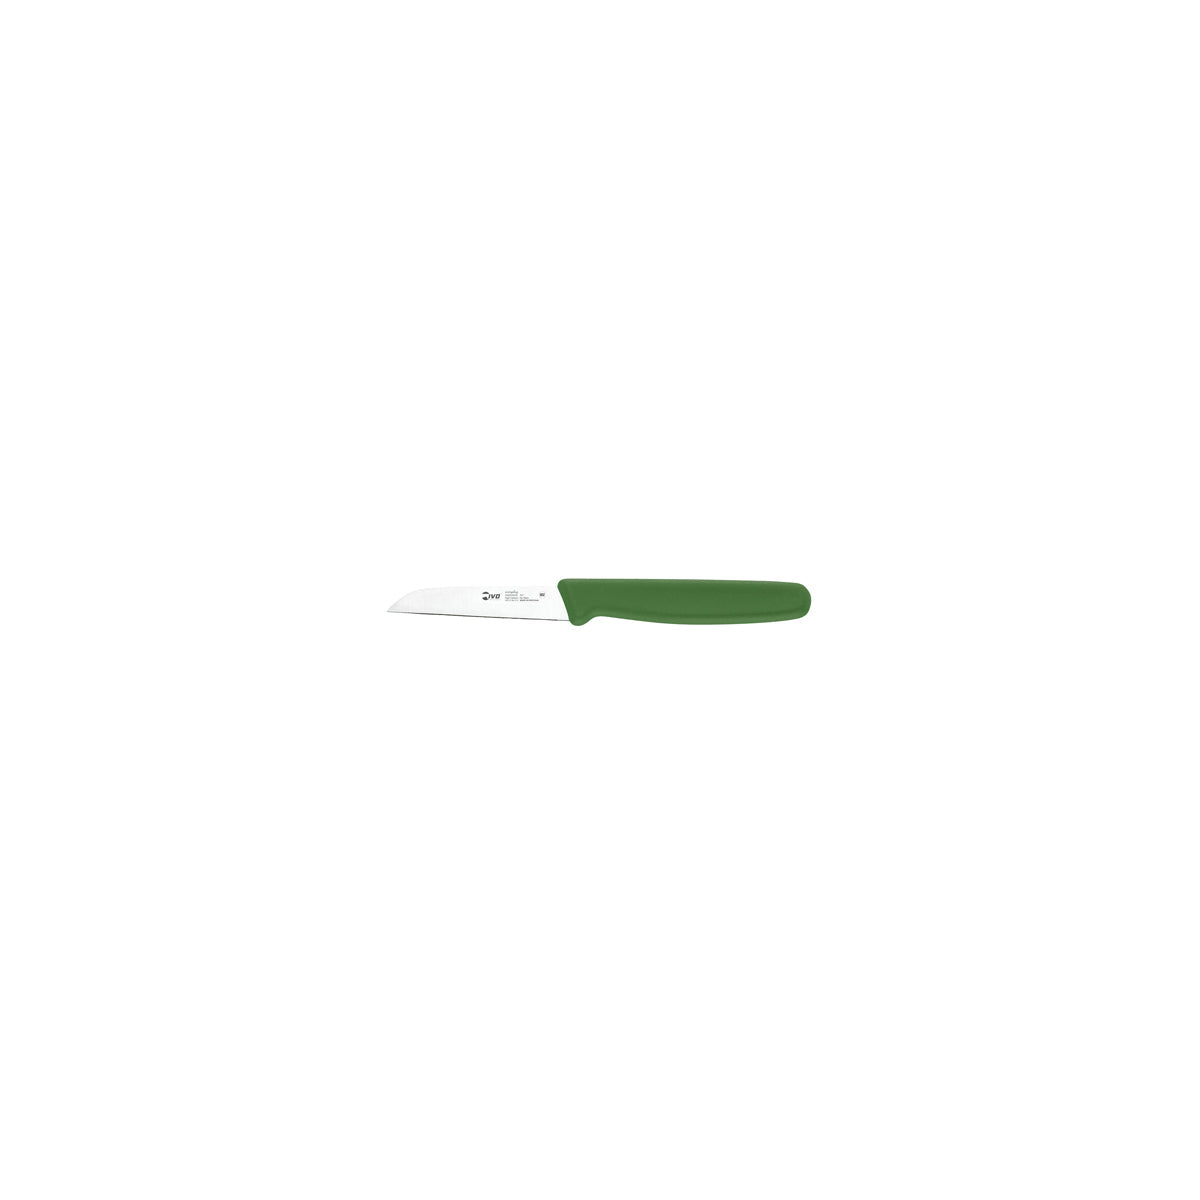 25440 Ivo Professional Line I Paring Knife Green 90mm Tomkin Australia Hospitality Supplies